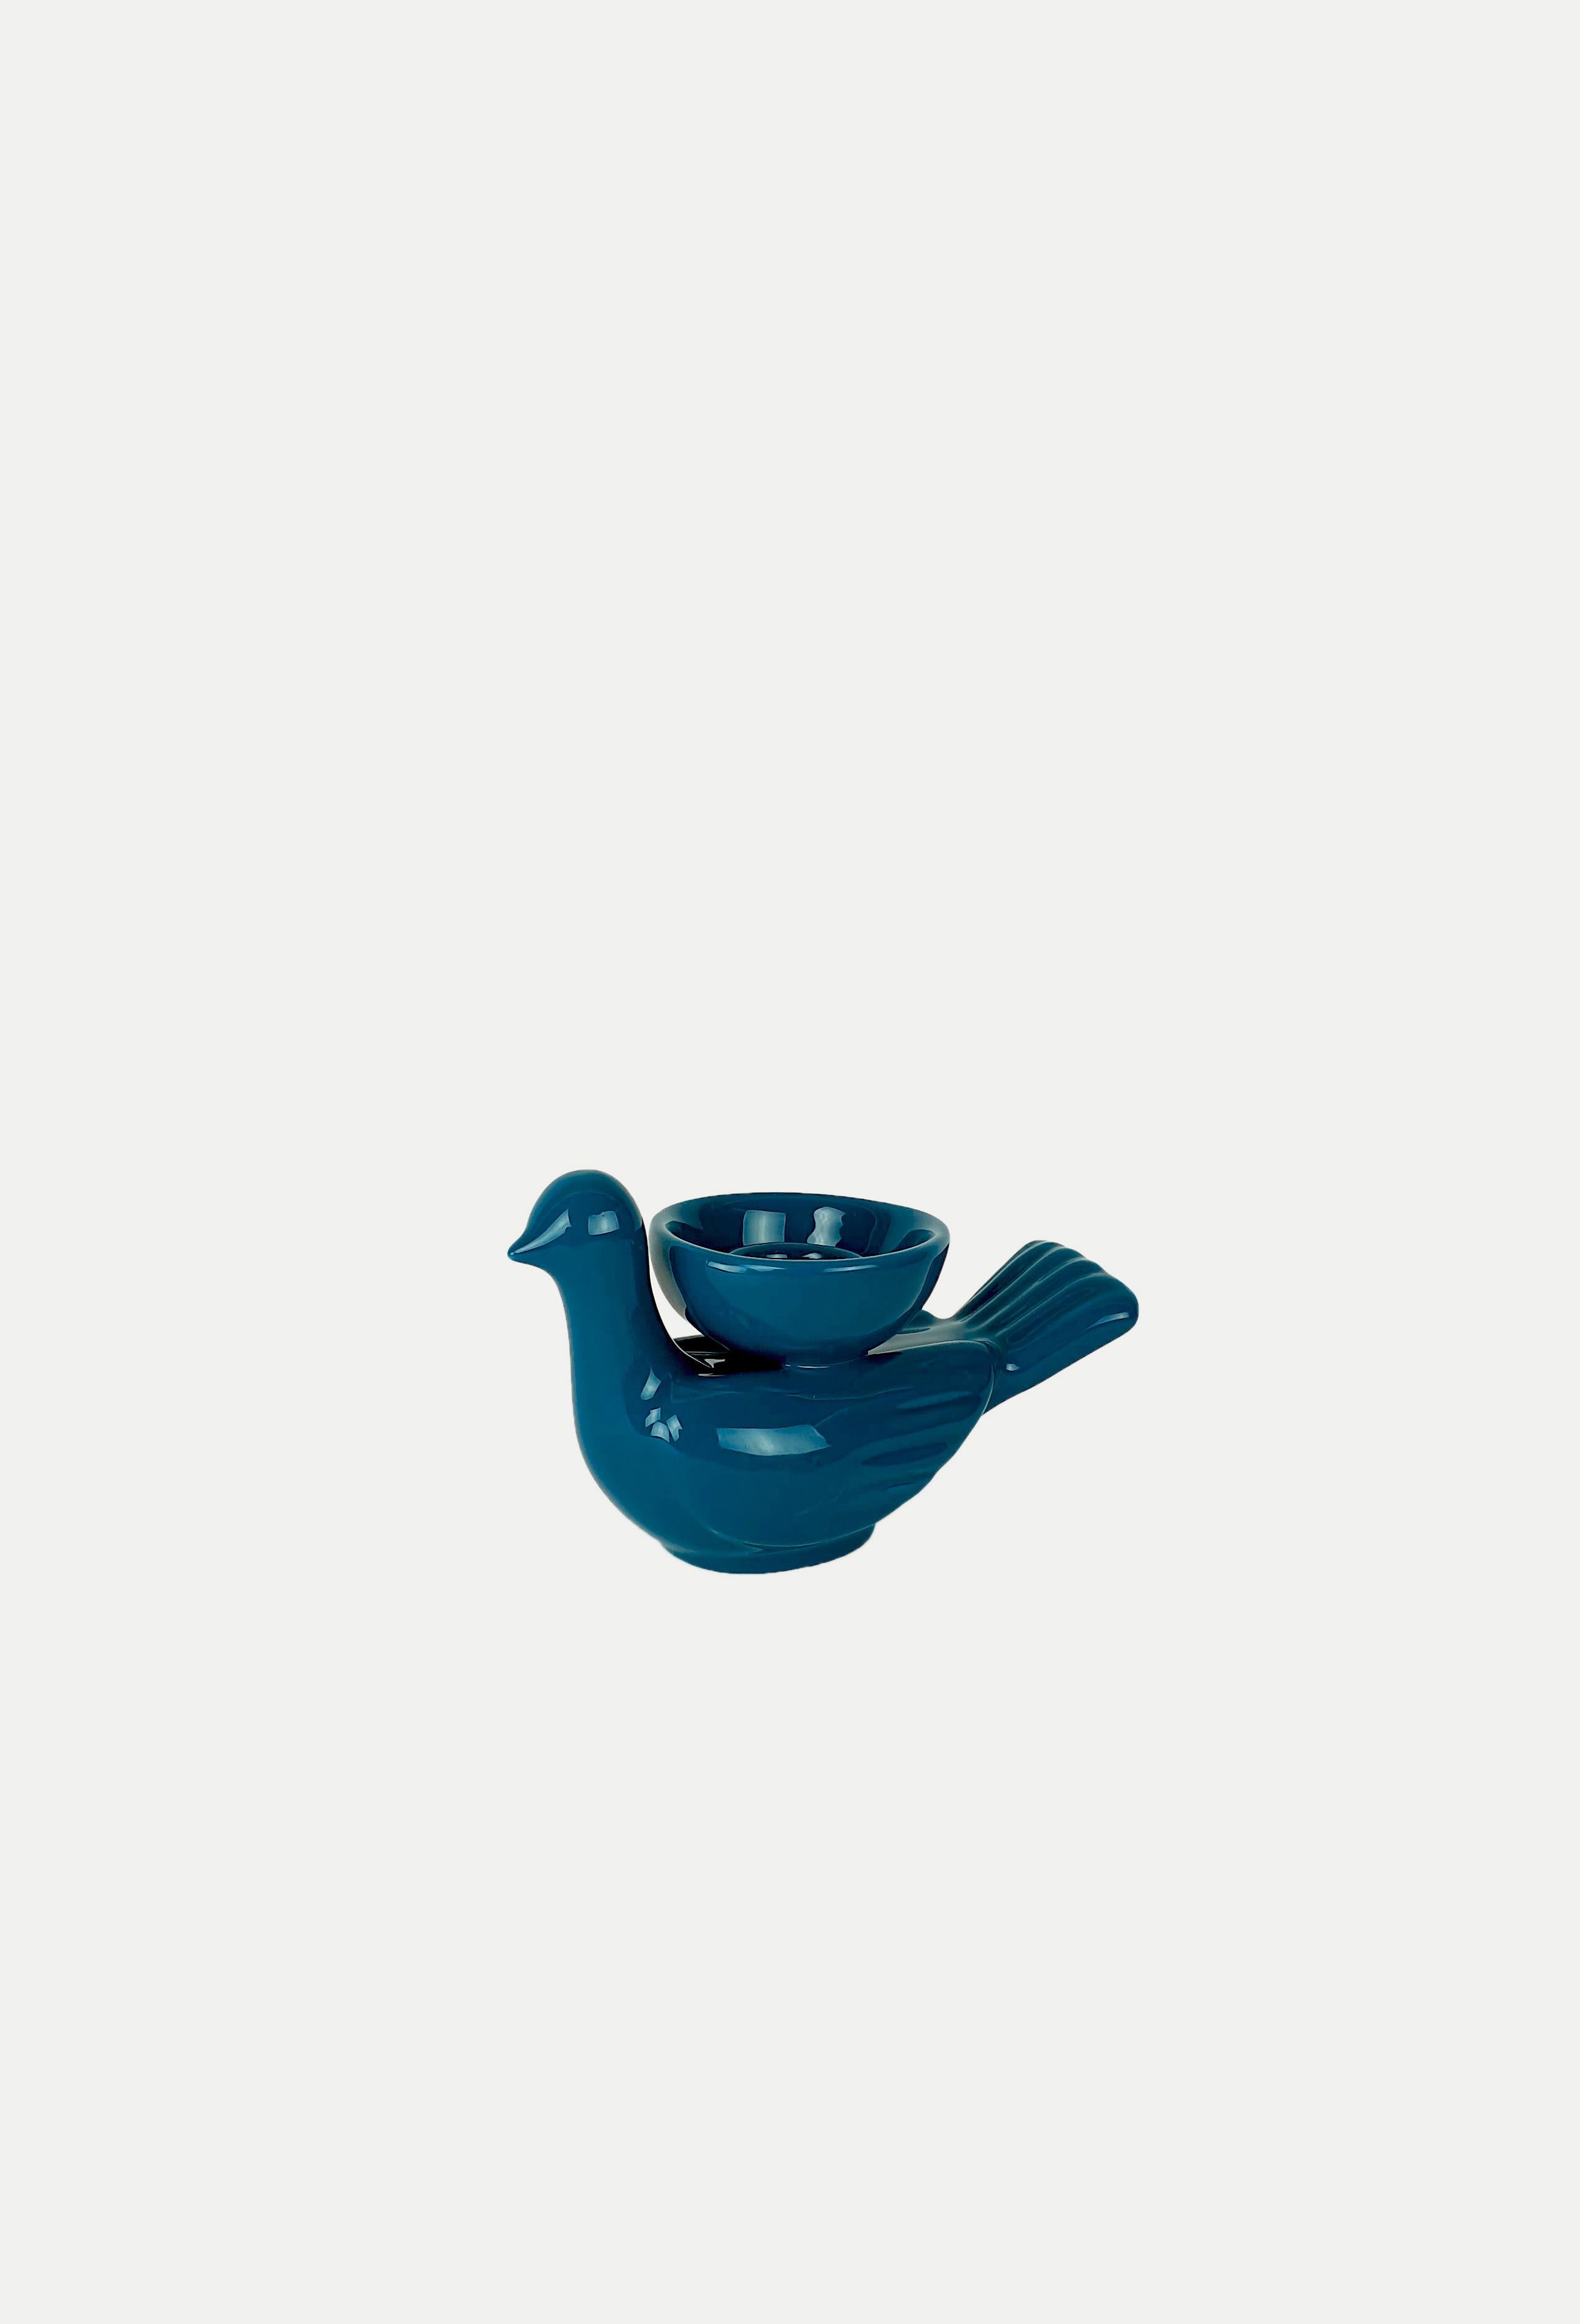 Arts and Crafts Modern Ceramica Gatti 1928 Ceramic Little Dark Blue Navy Dove Candle Holder For Sale